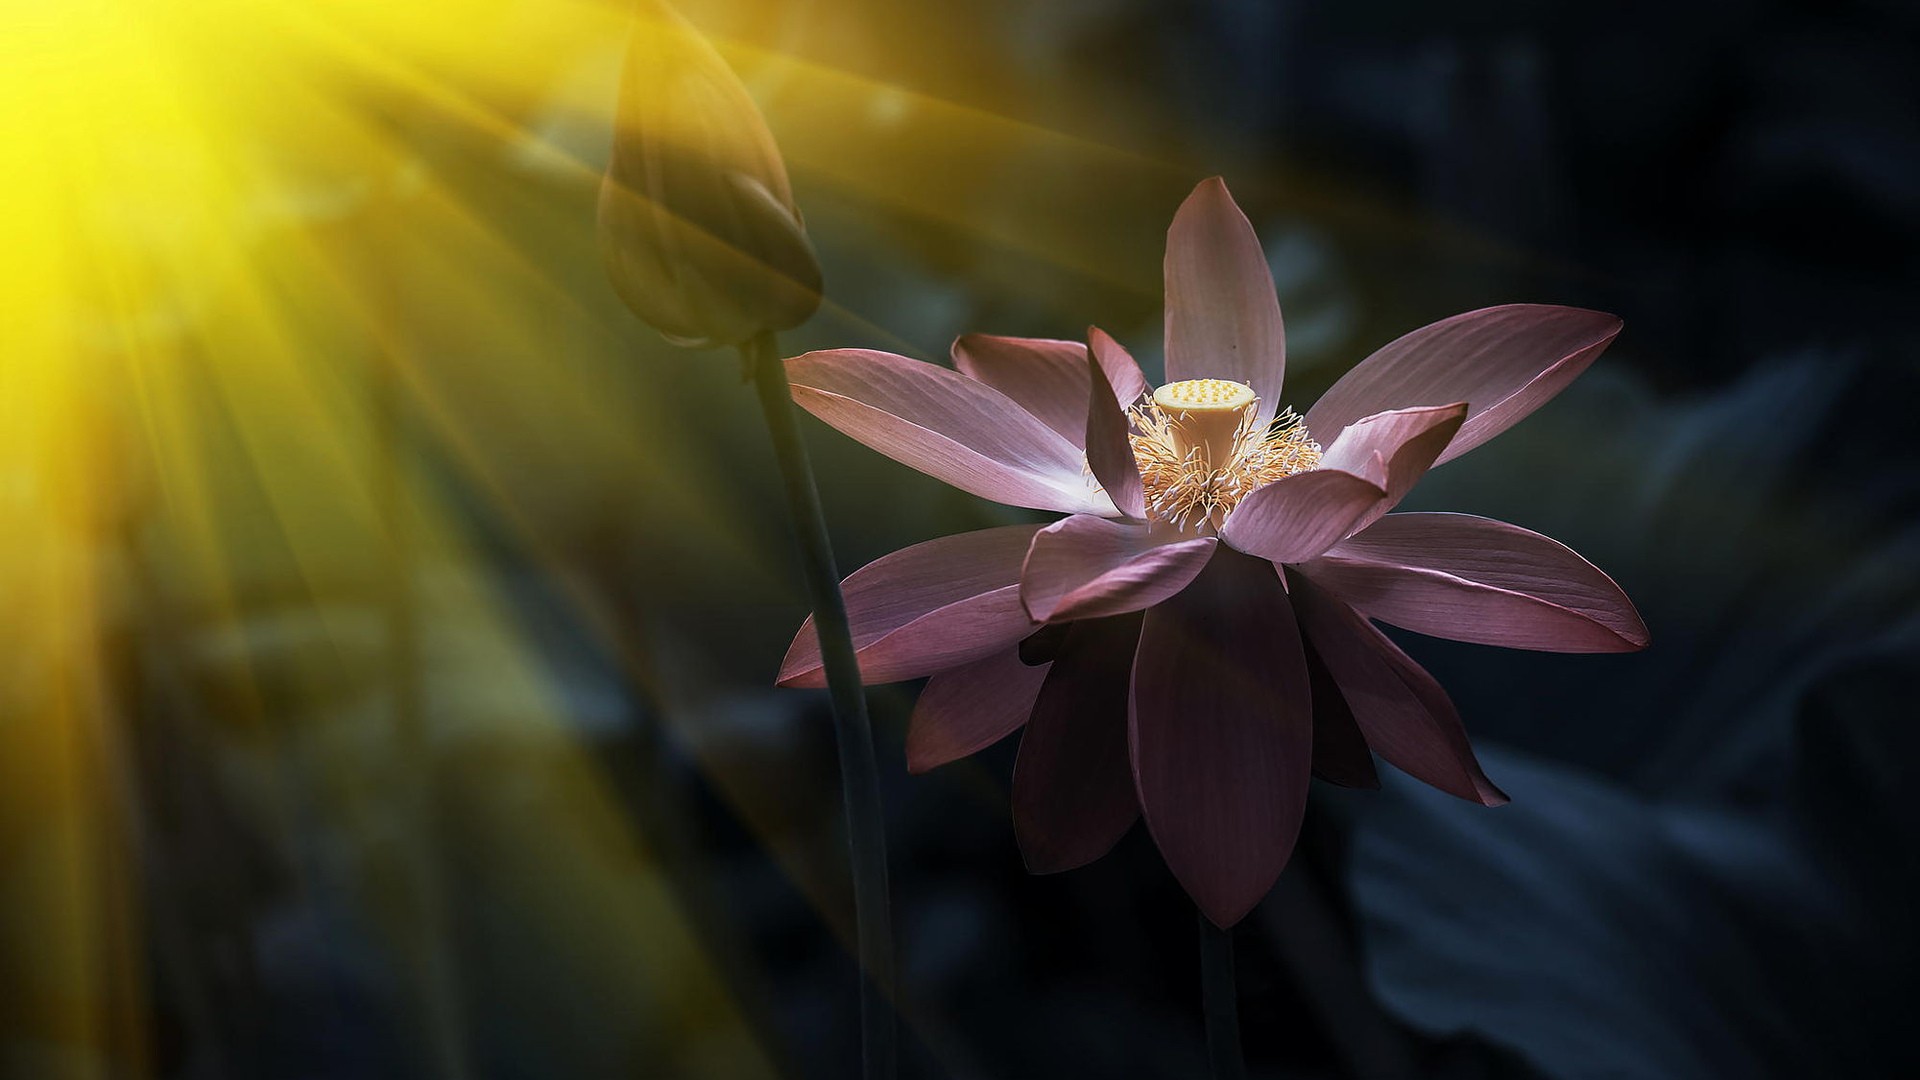 Desktop Wallpaper Pink Lotus Flower Sunlight, Hd Image, Picture,  Background, Jsprq0